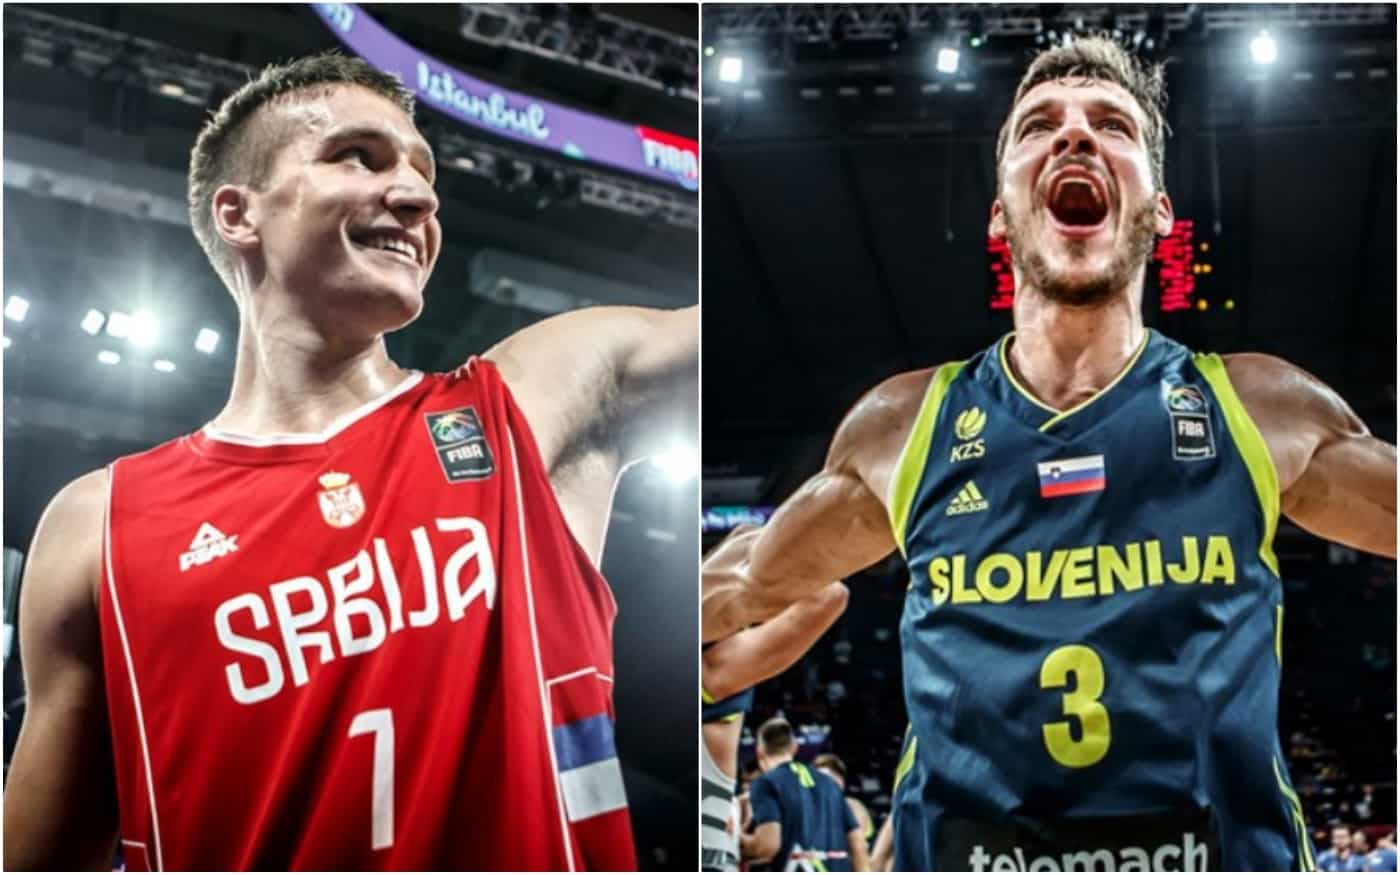 Eurobasket 2017 : une finale Serbie-Slovénie bouillante